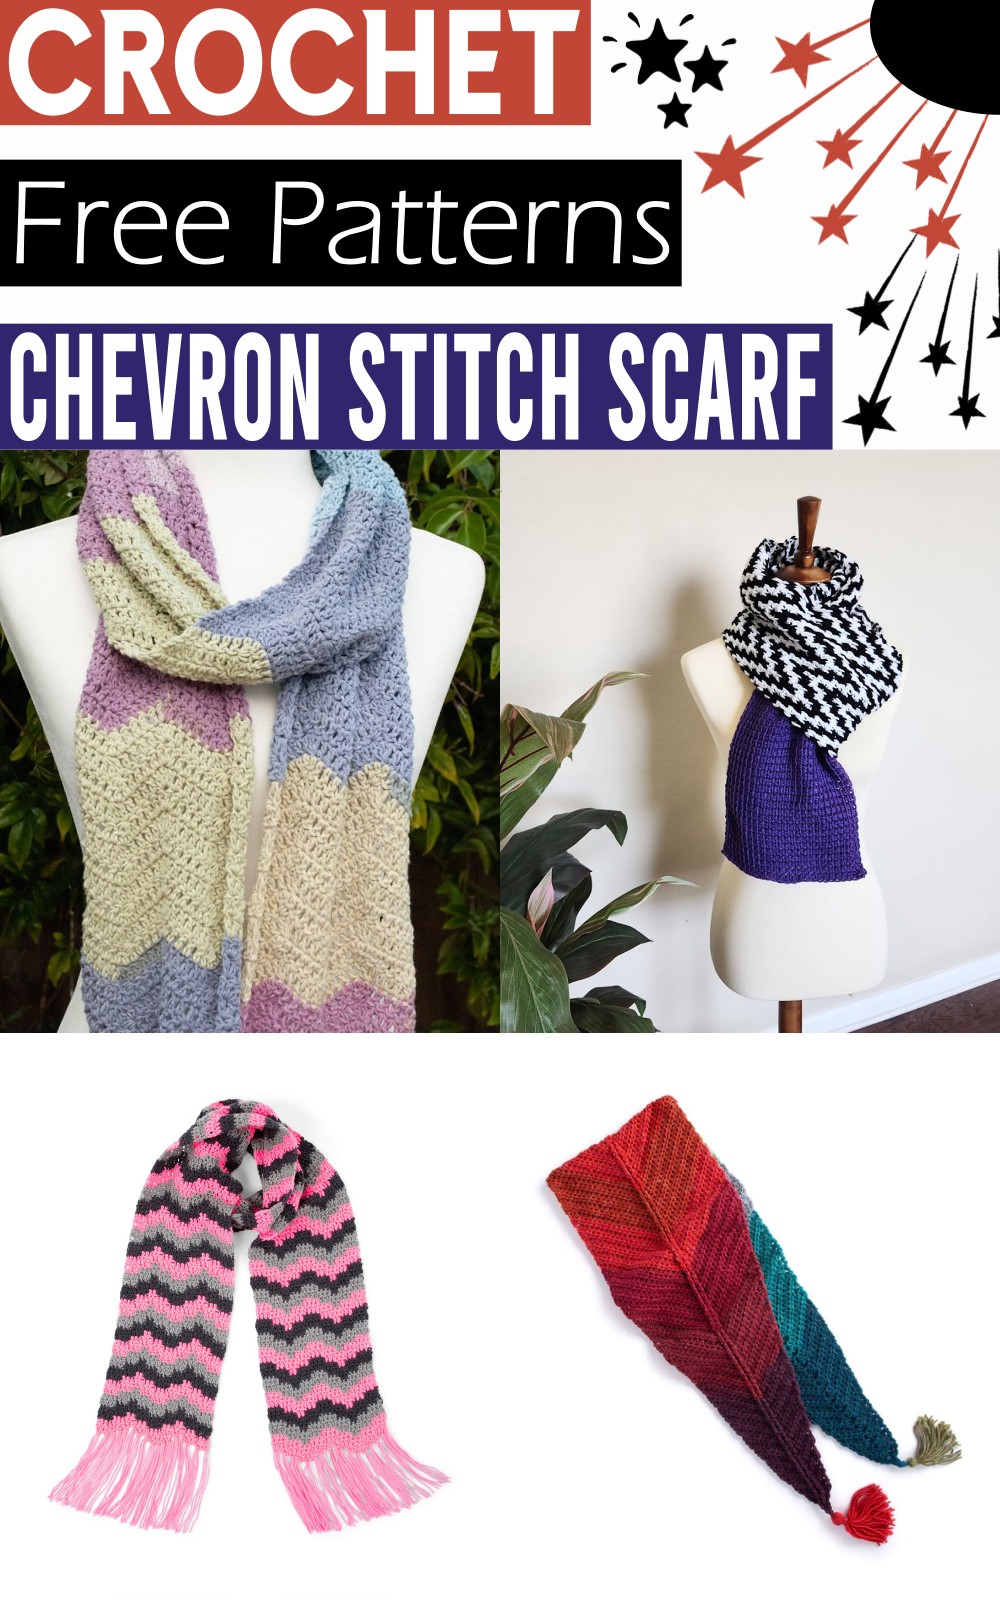 Chevron Stitch Crochet Scarf Patterns